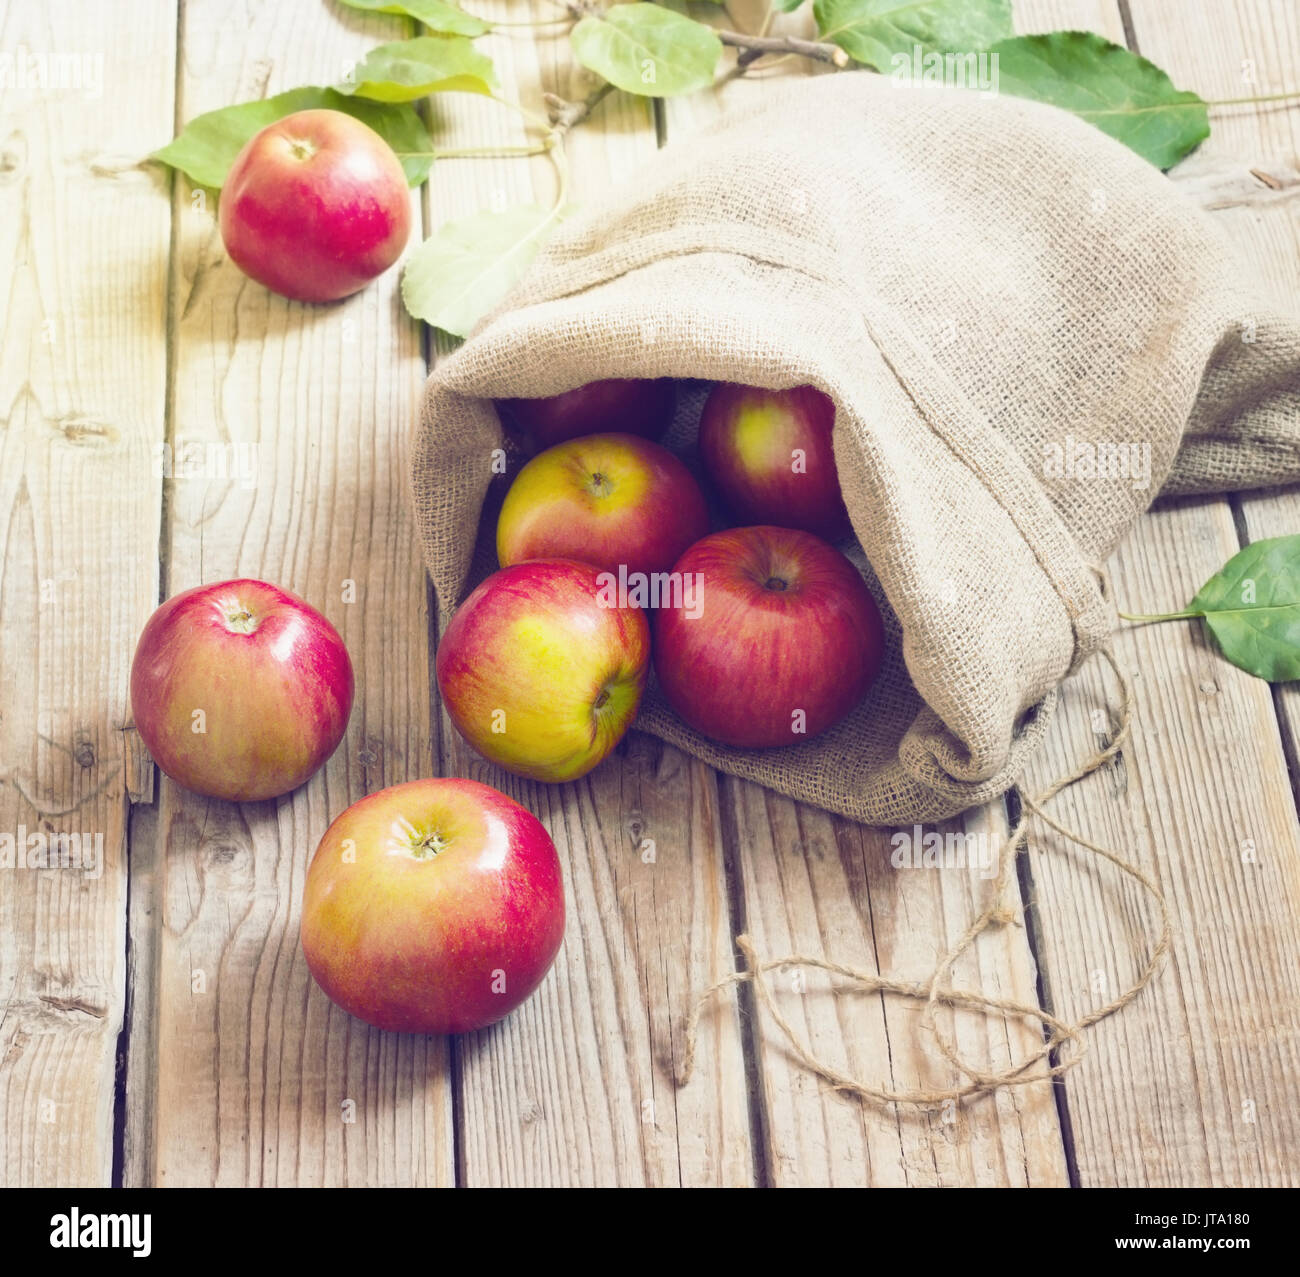 https://c8.alamy.com/comp/JTA180/ripe-red-apples-in-a-bag-on-old-wooden-background-toning-JTA180.jpg